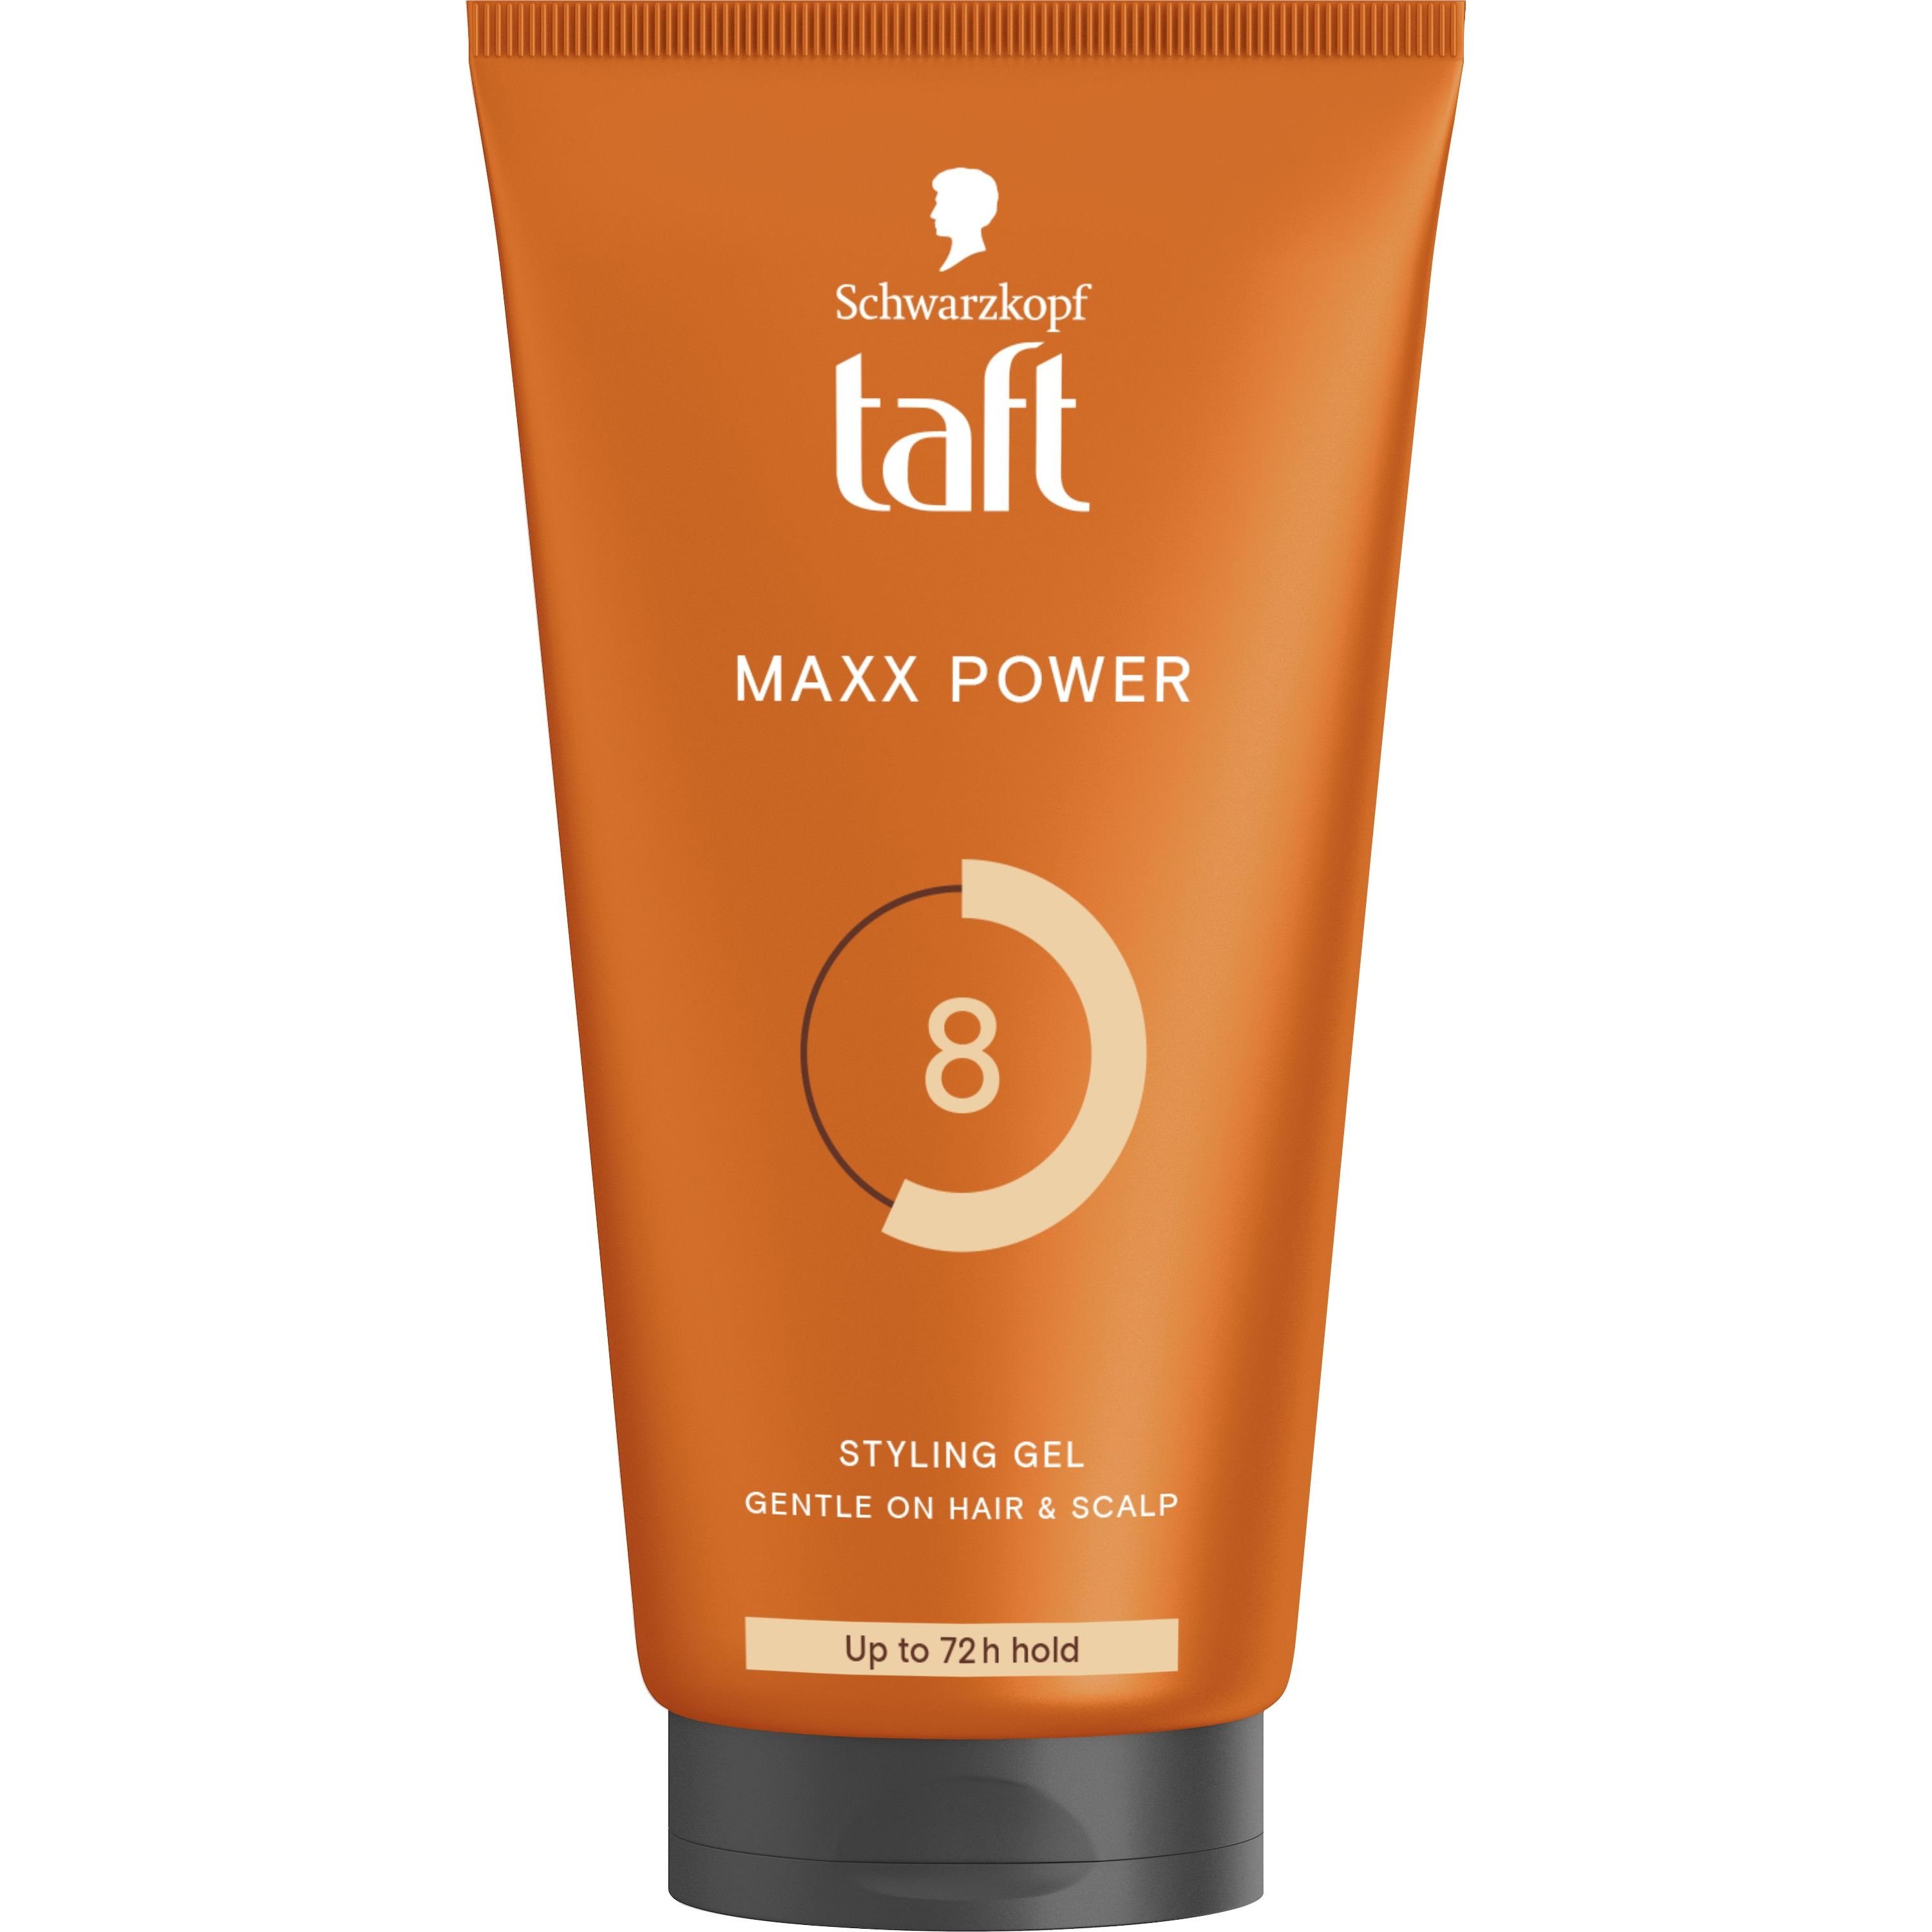 Гель для волосся Taft Maxx Power 8, 150 мл - фото 1